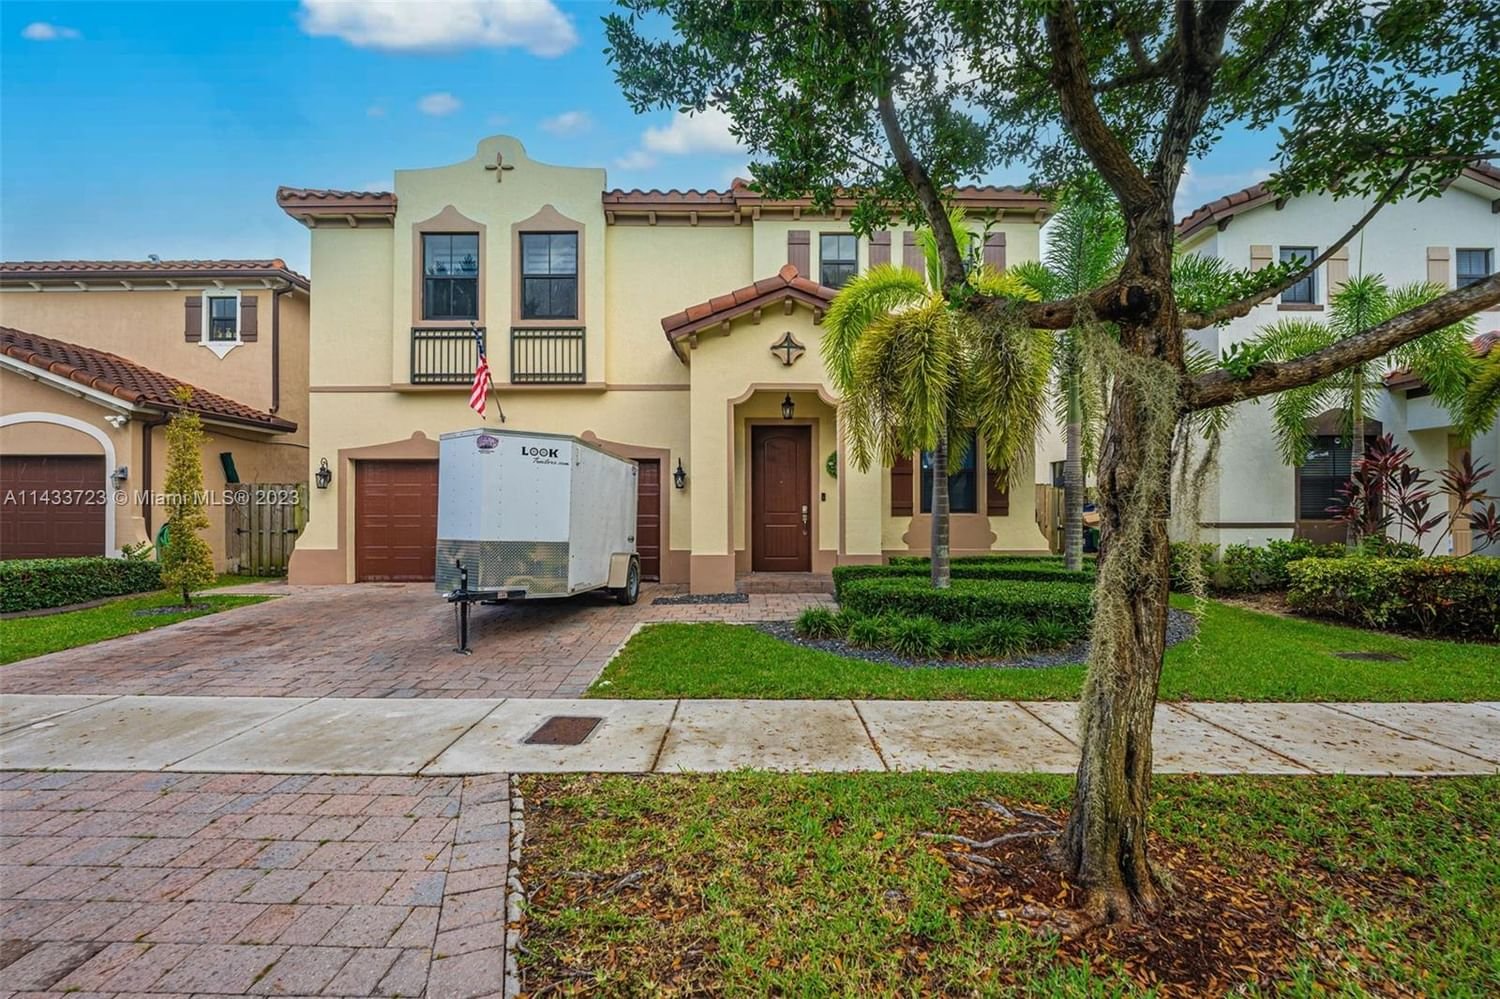 Real estate property located at 15258 173rd Ln, Miami-Dade County, Miami, FL